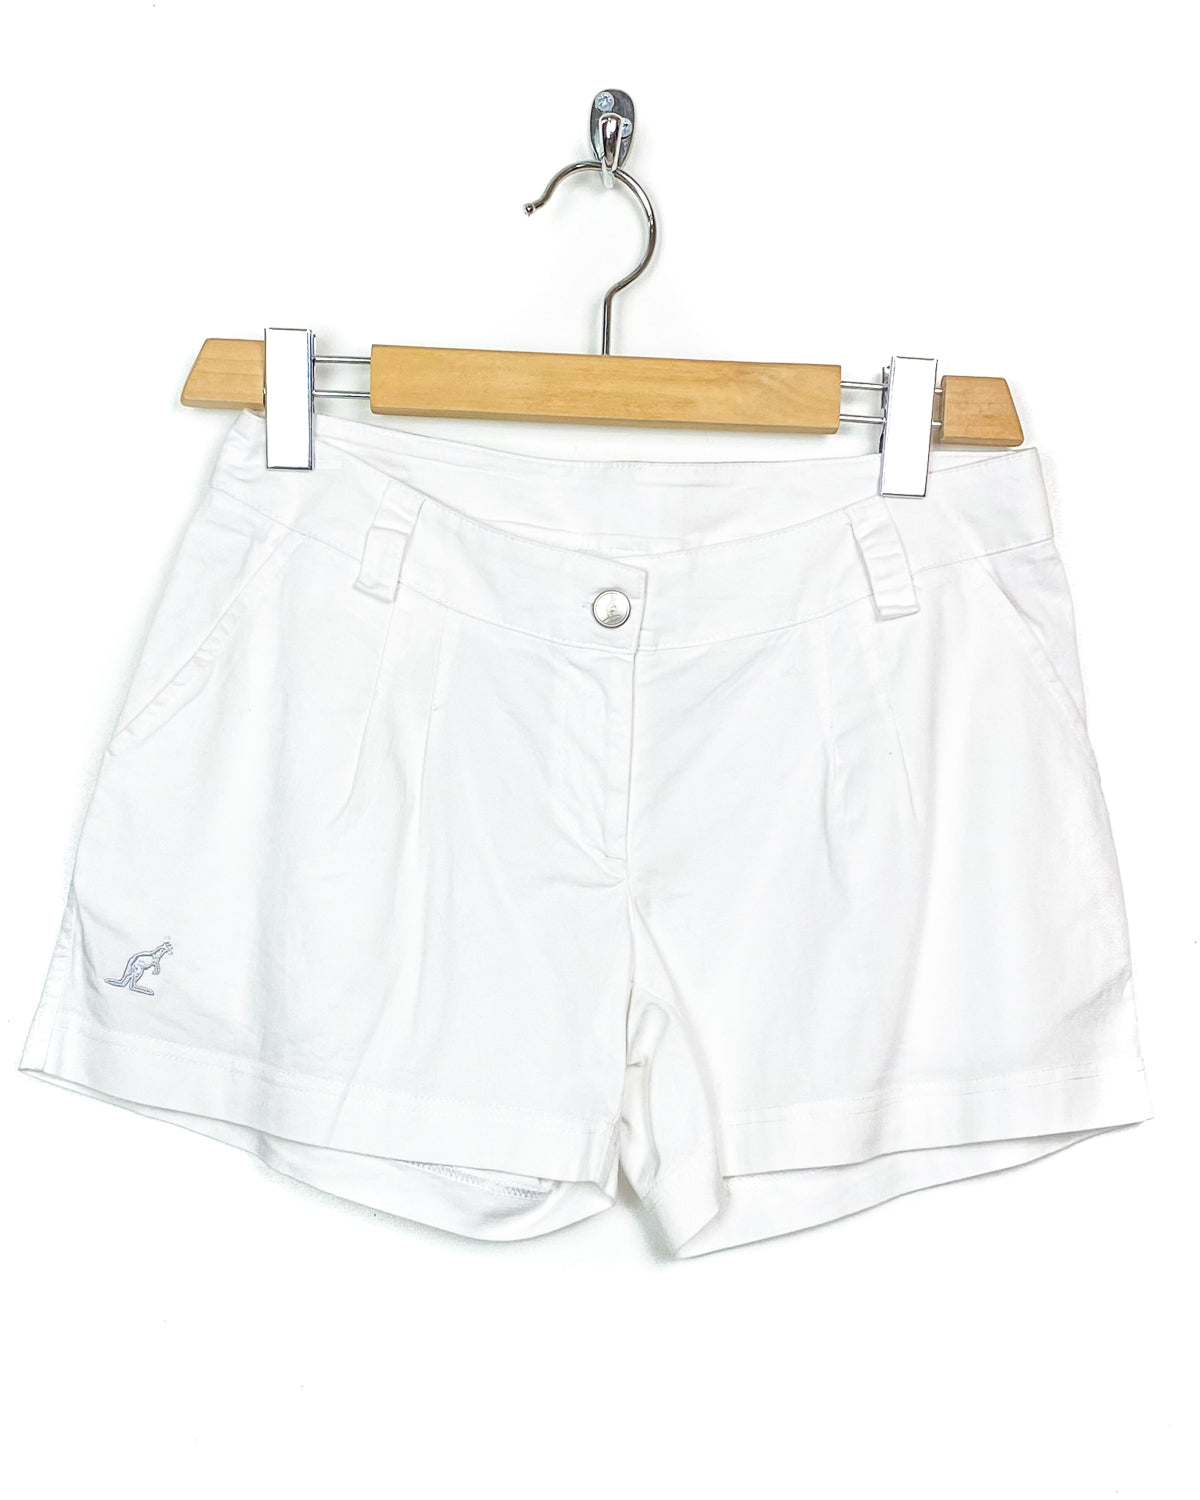 Australian - Shorts Basic Taglia 44